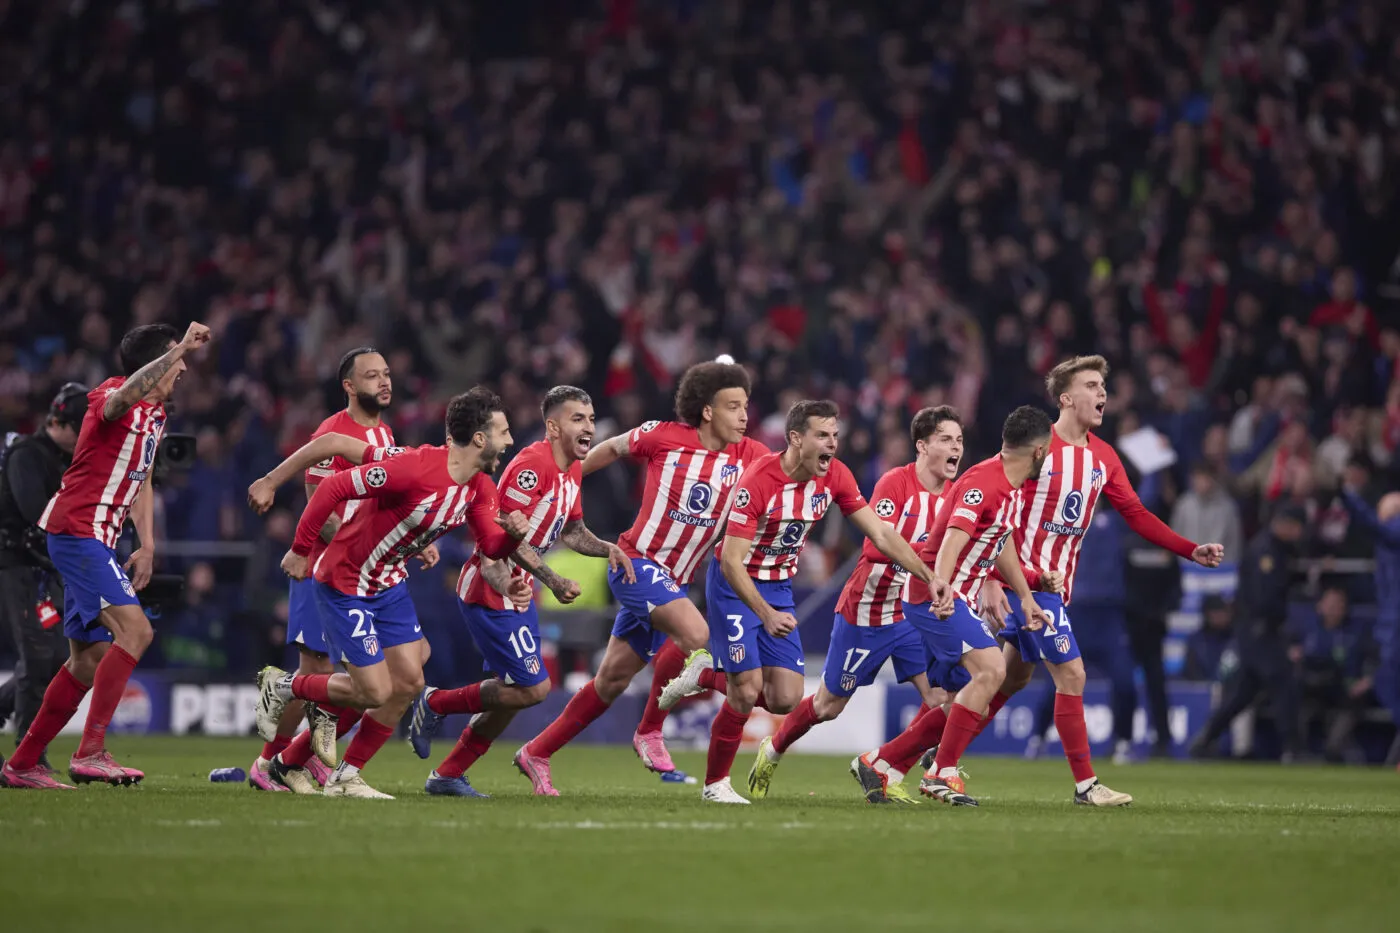 Pronostic Atlético FC Barcelone : Analyse, cotes et prono du match de Liga